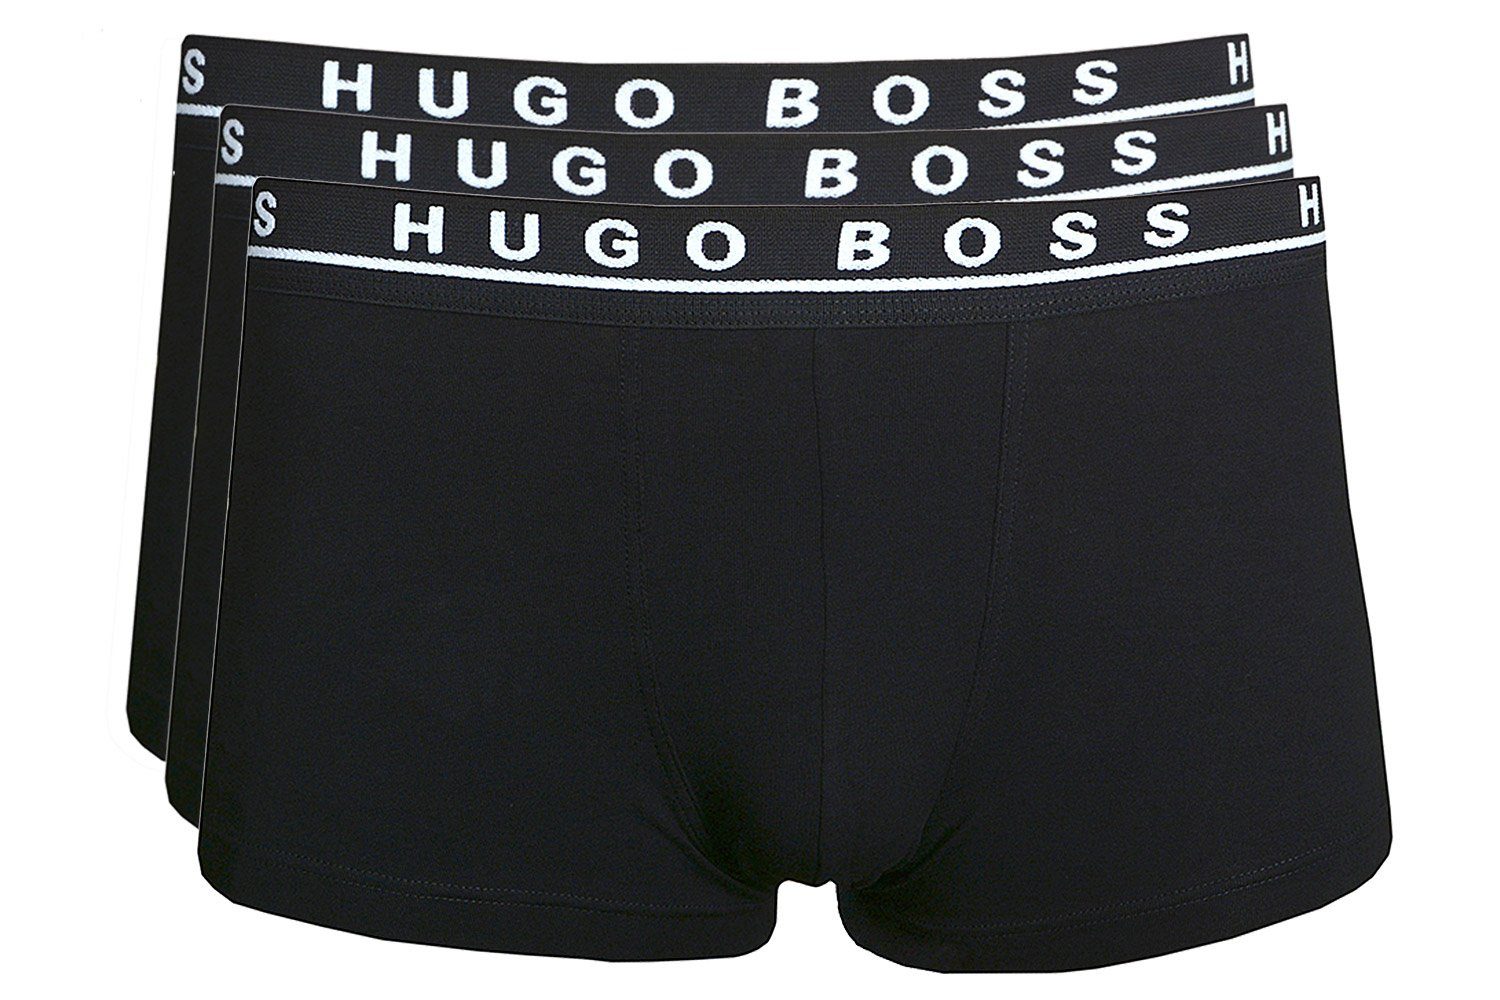 HUGO BOSS Boxershorts online kaufen | OTTO